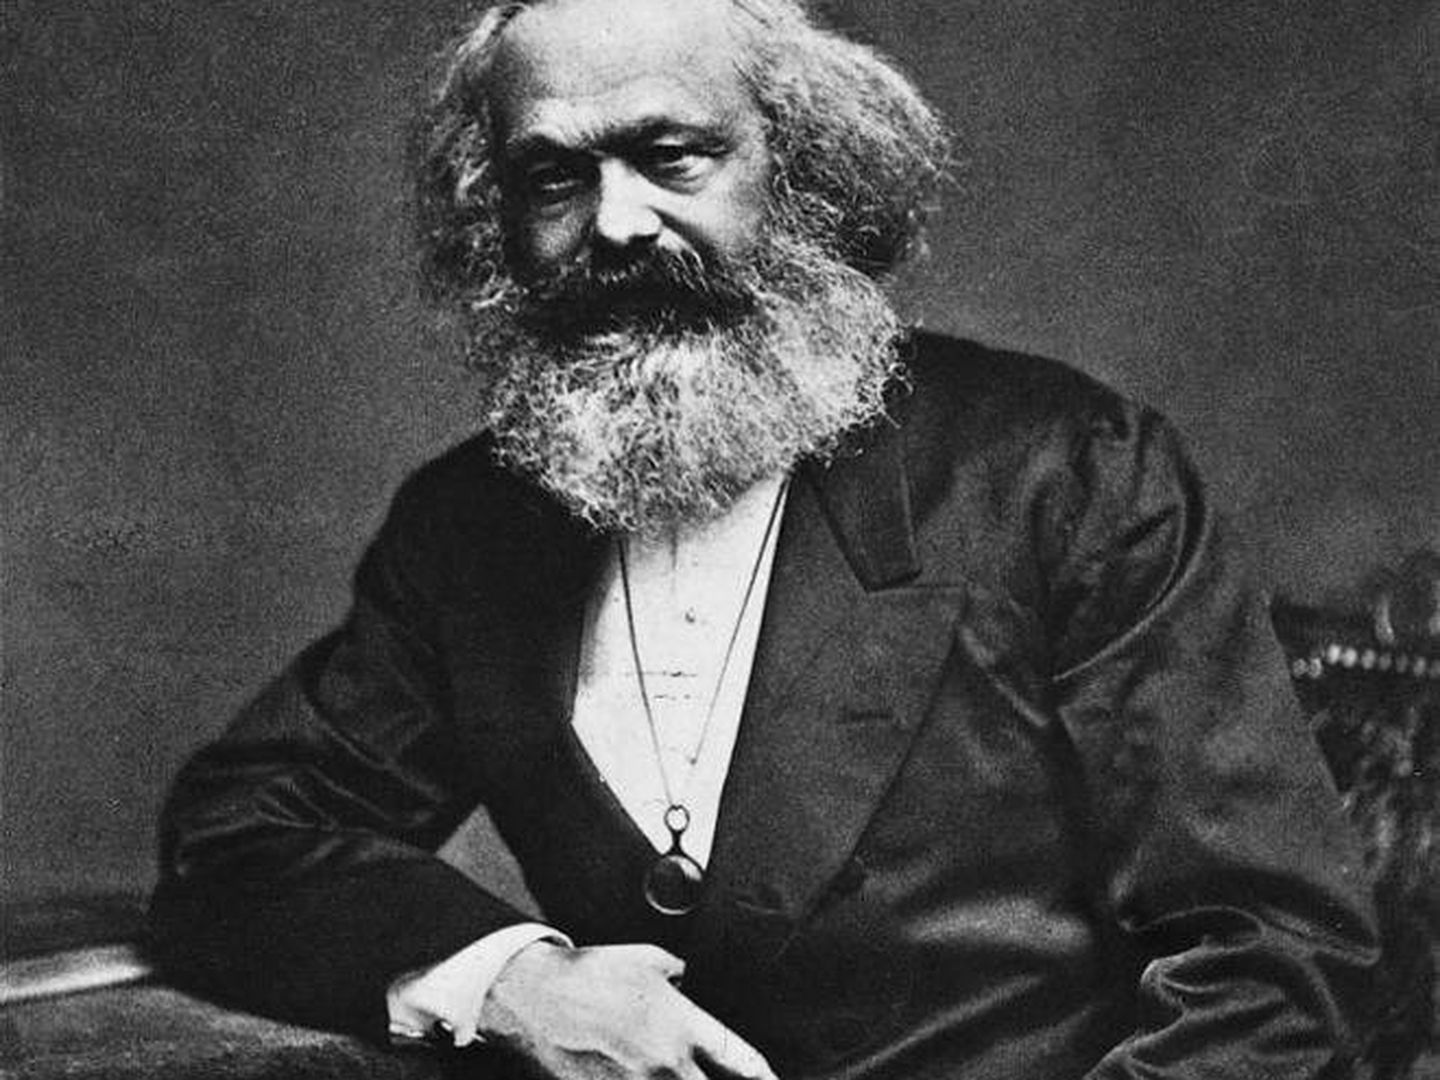 Fotografía del filósofo Karl Marx.